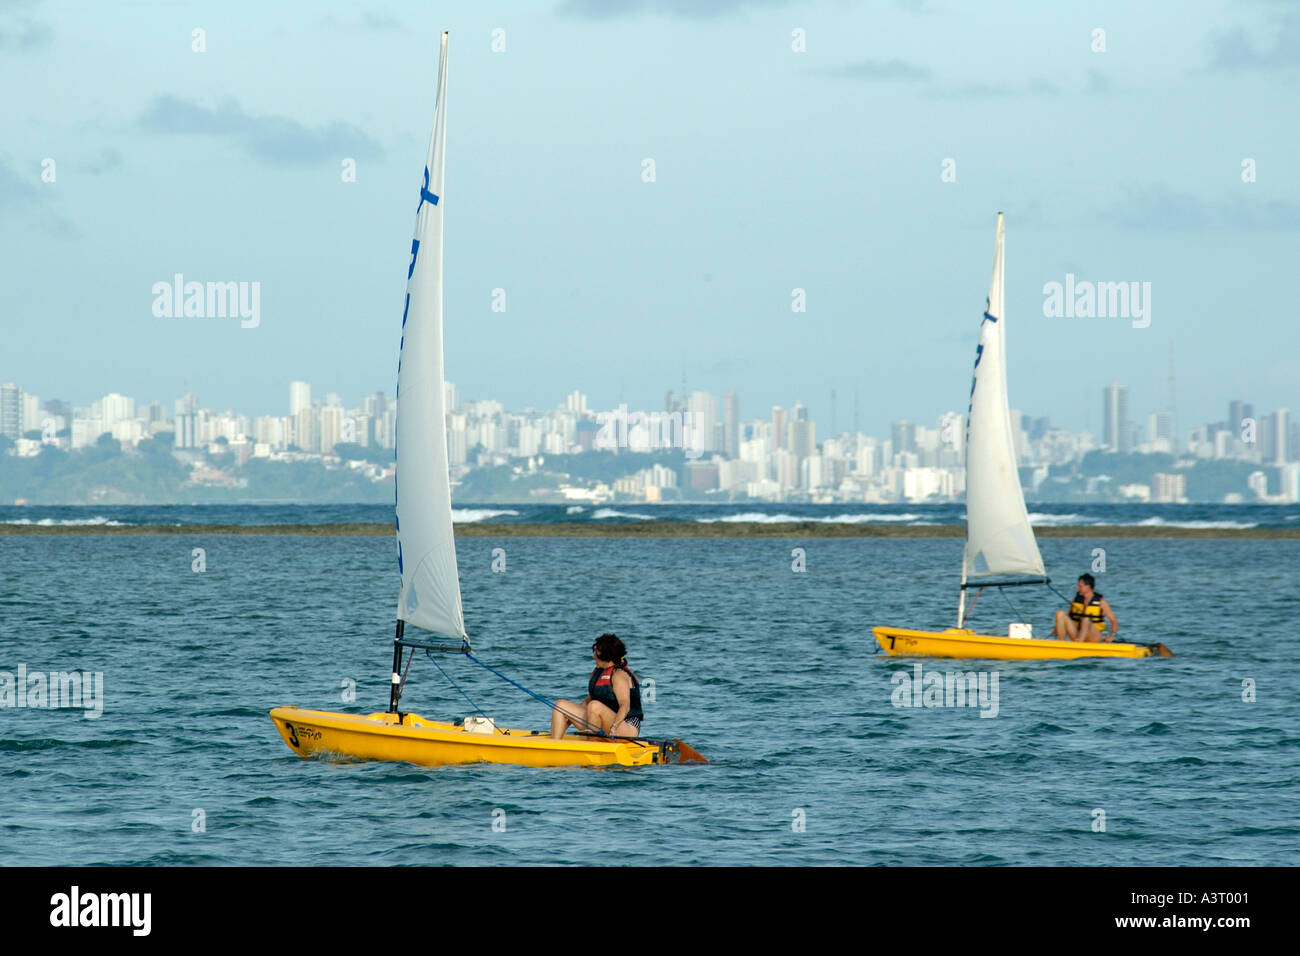 Resort tourists enjoy windsurfing on the waters of Todos os Santos Bay at Itaparica Island Bahia Brazil Stock Photo